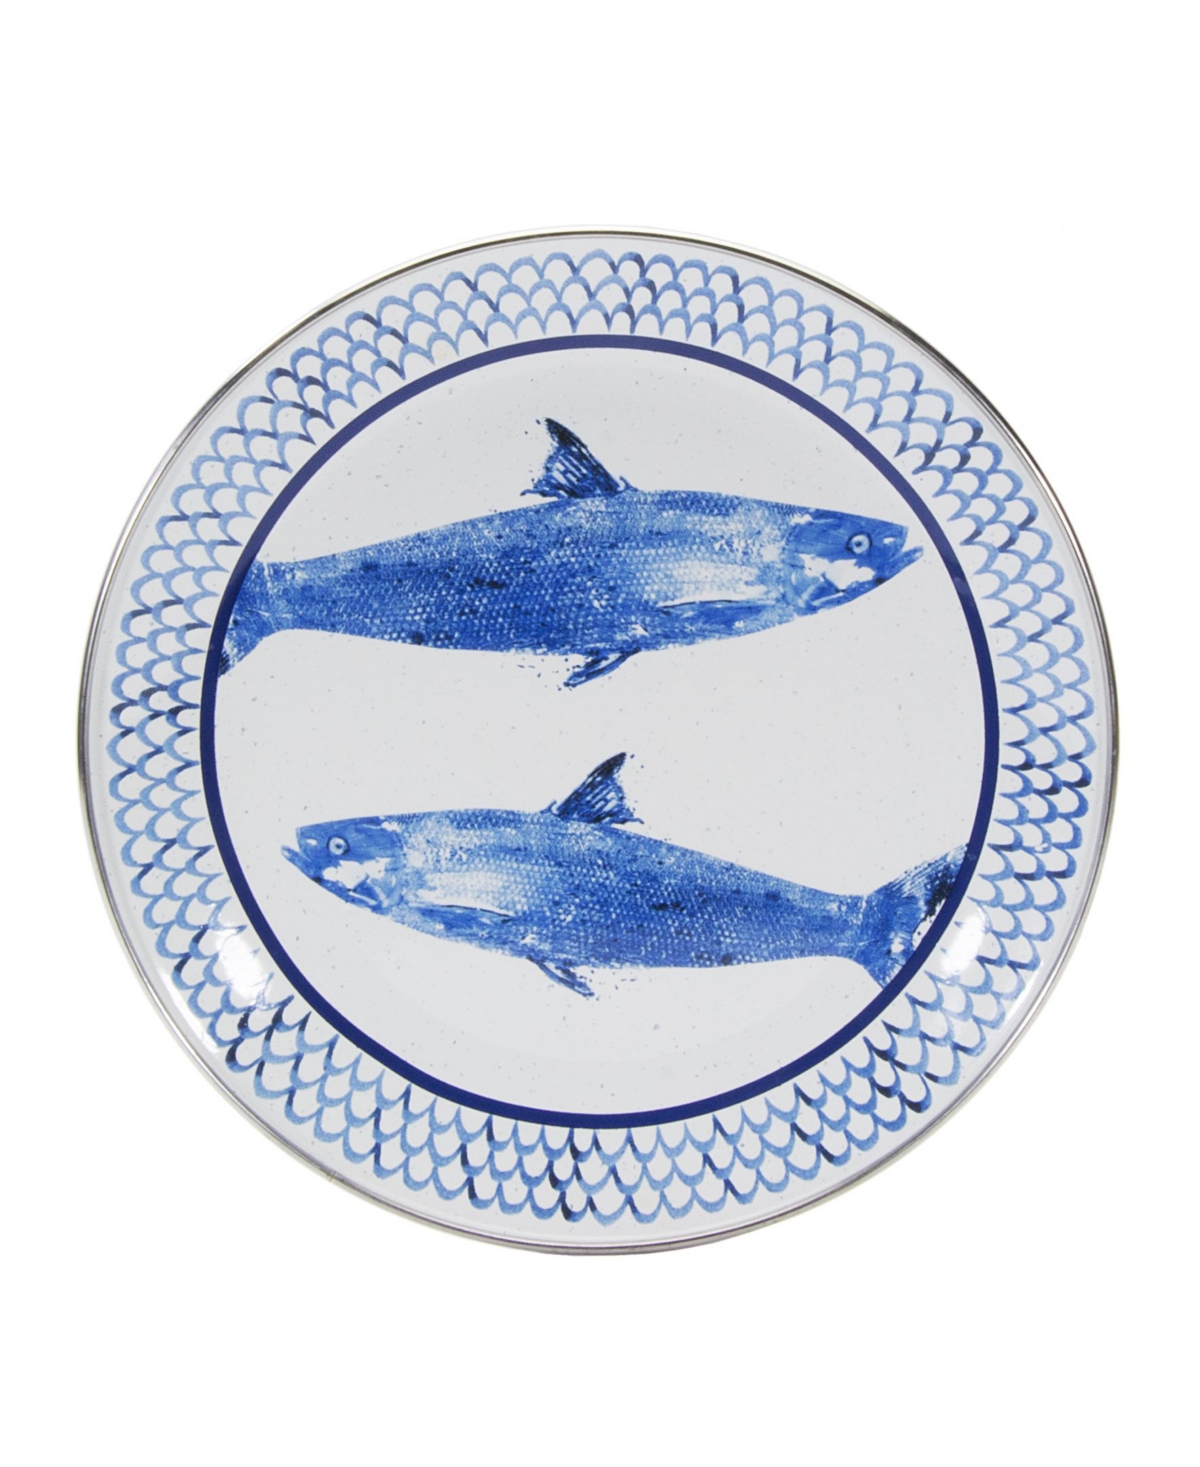 Fish Camp Enamelware Sandwich Plates, Set of 4 - Blue